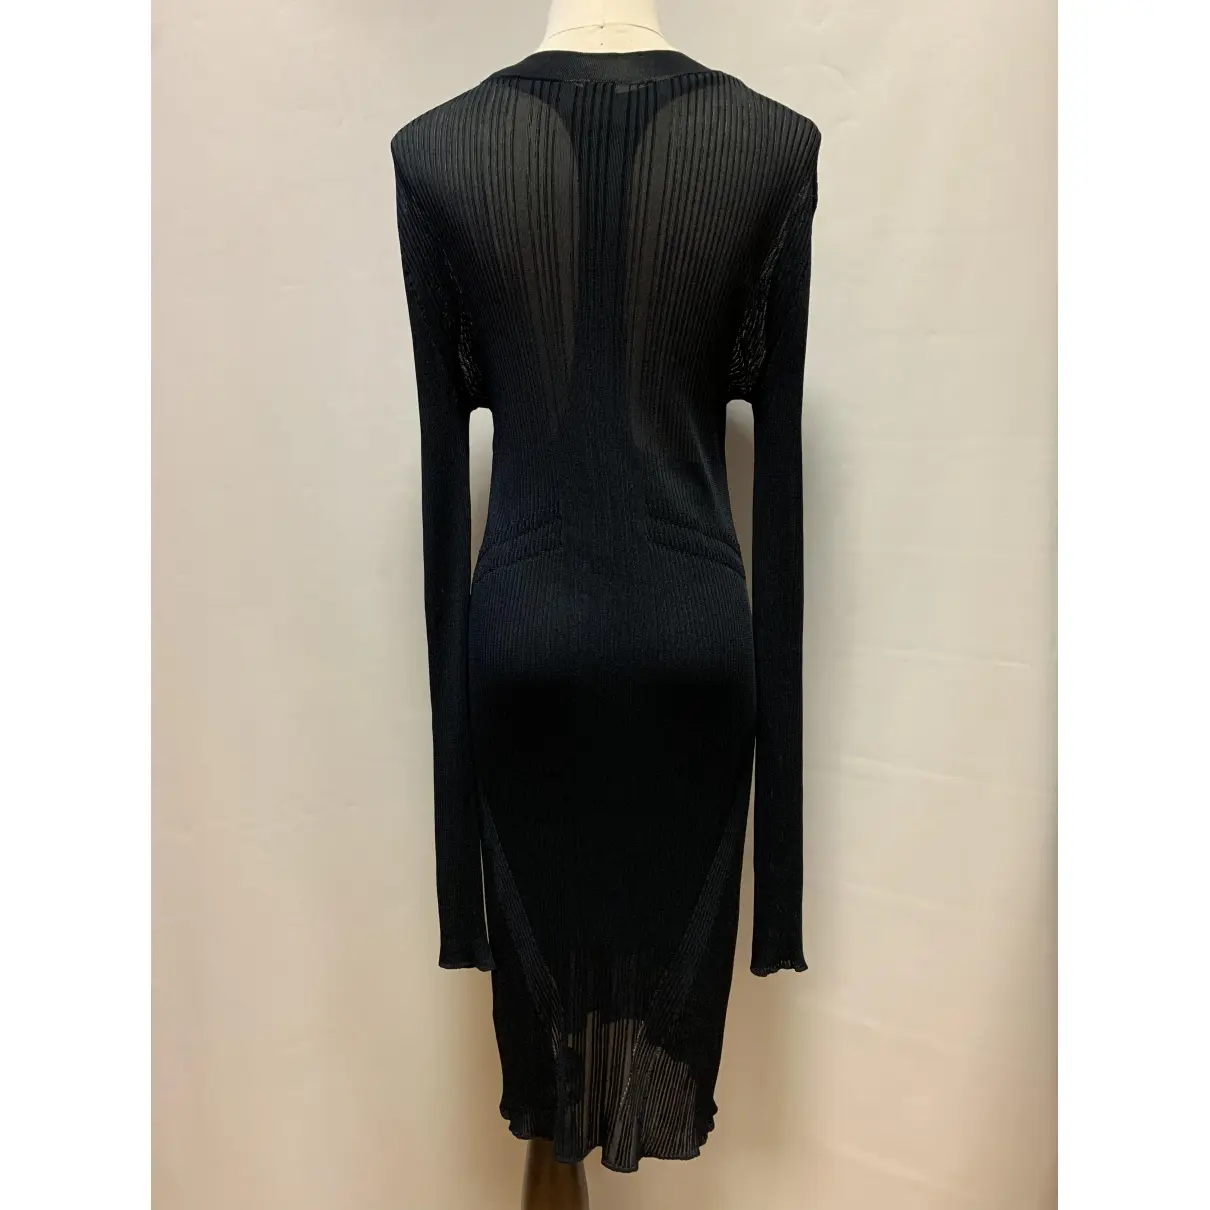 Vera Wang Mid-length dress for sale